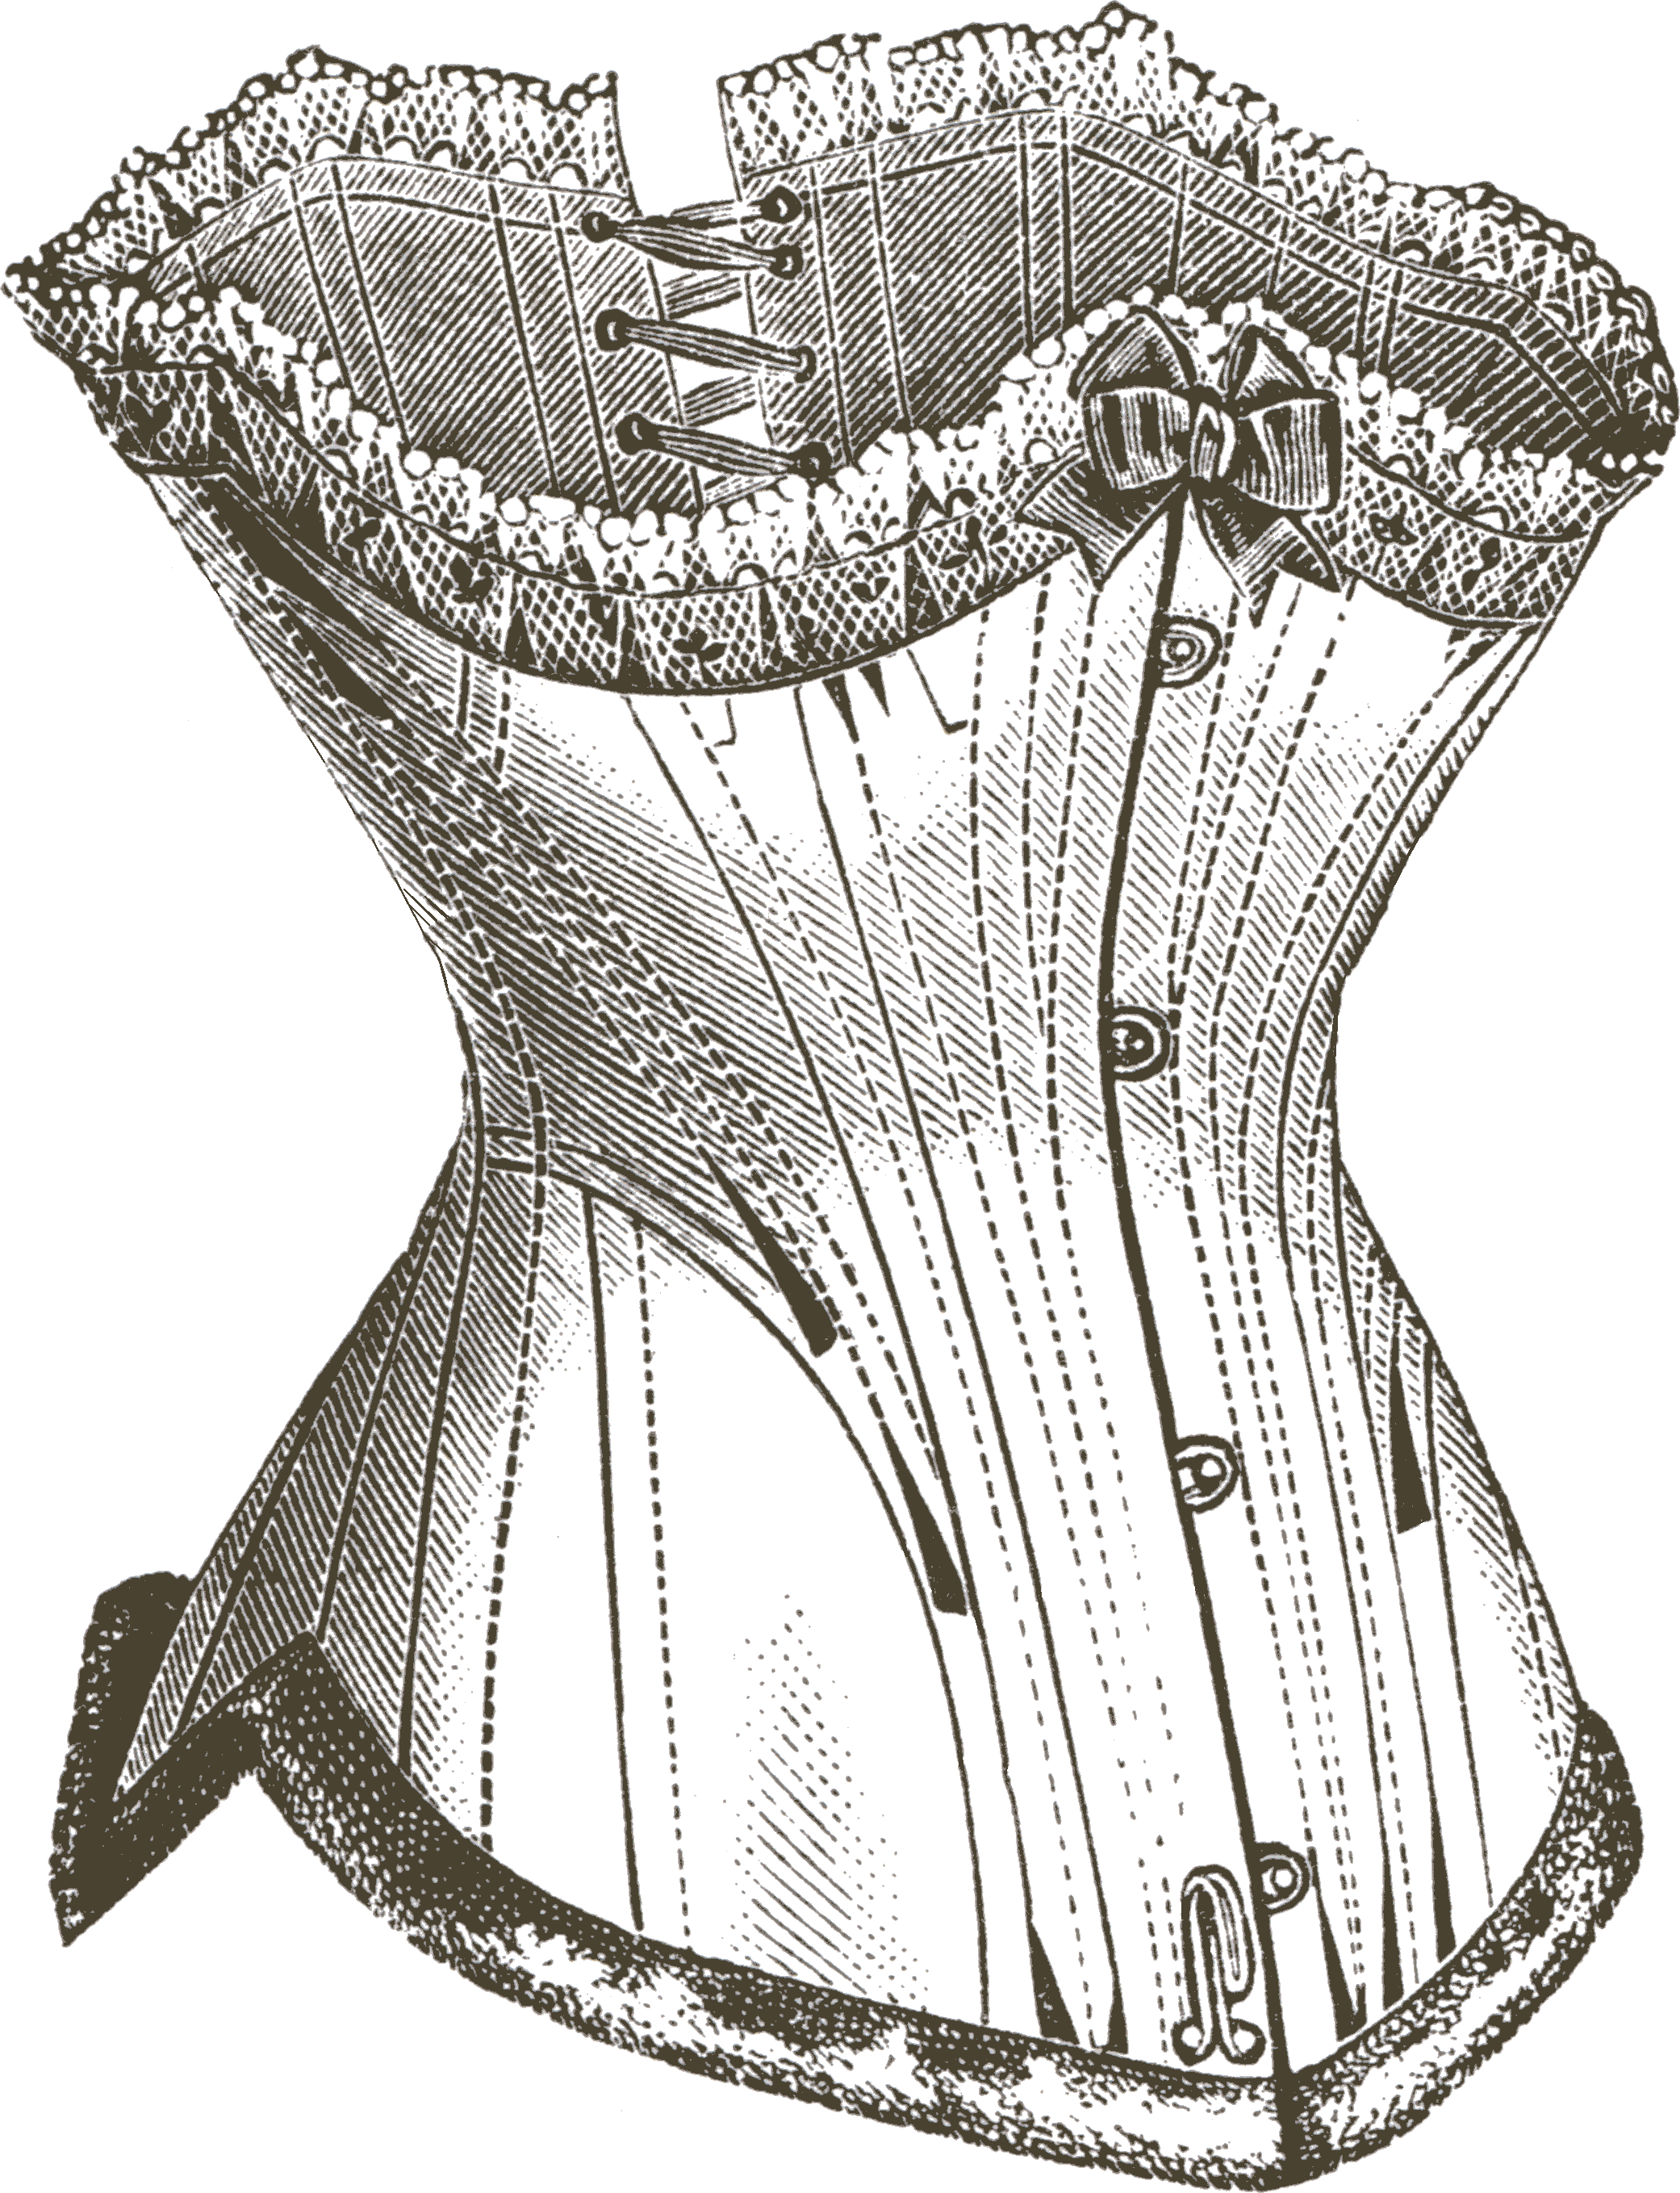 Women's Undergarments: Corsets, Girdles, Brassieres, Oh My!